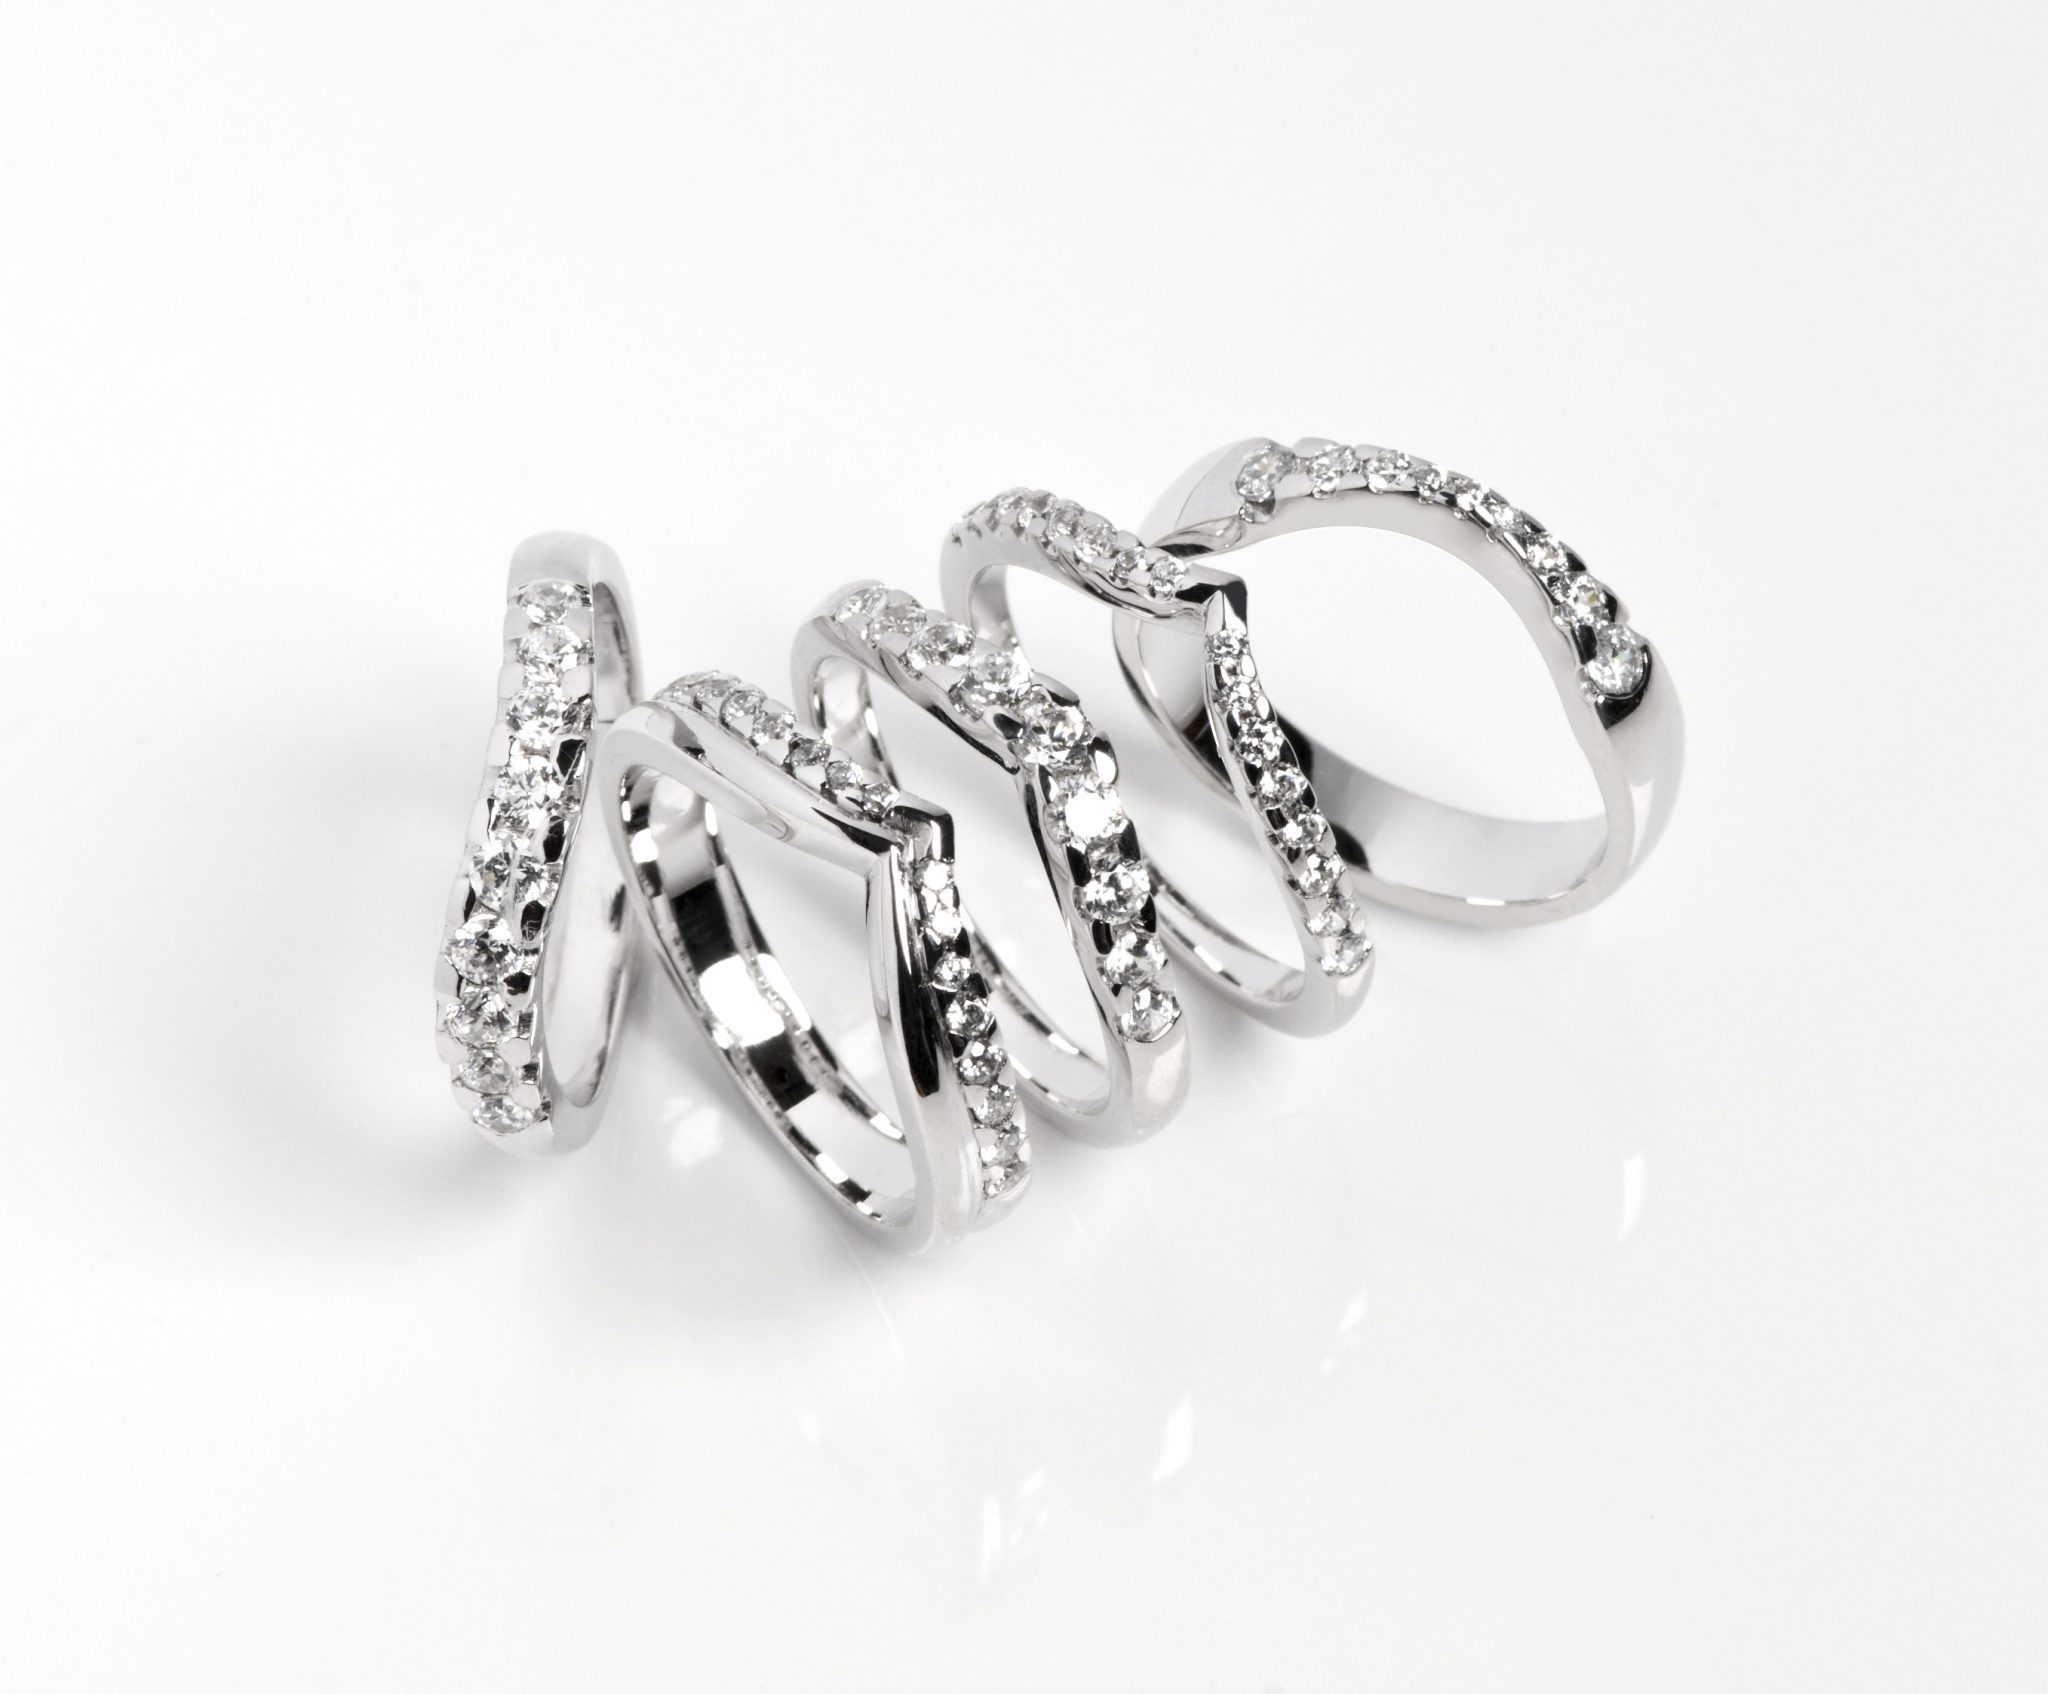 Choosing your perfect Wedding Ring